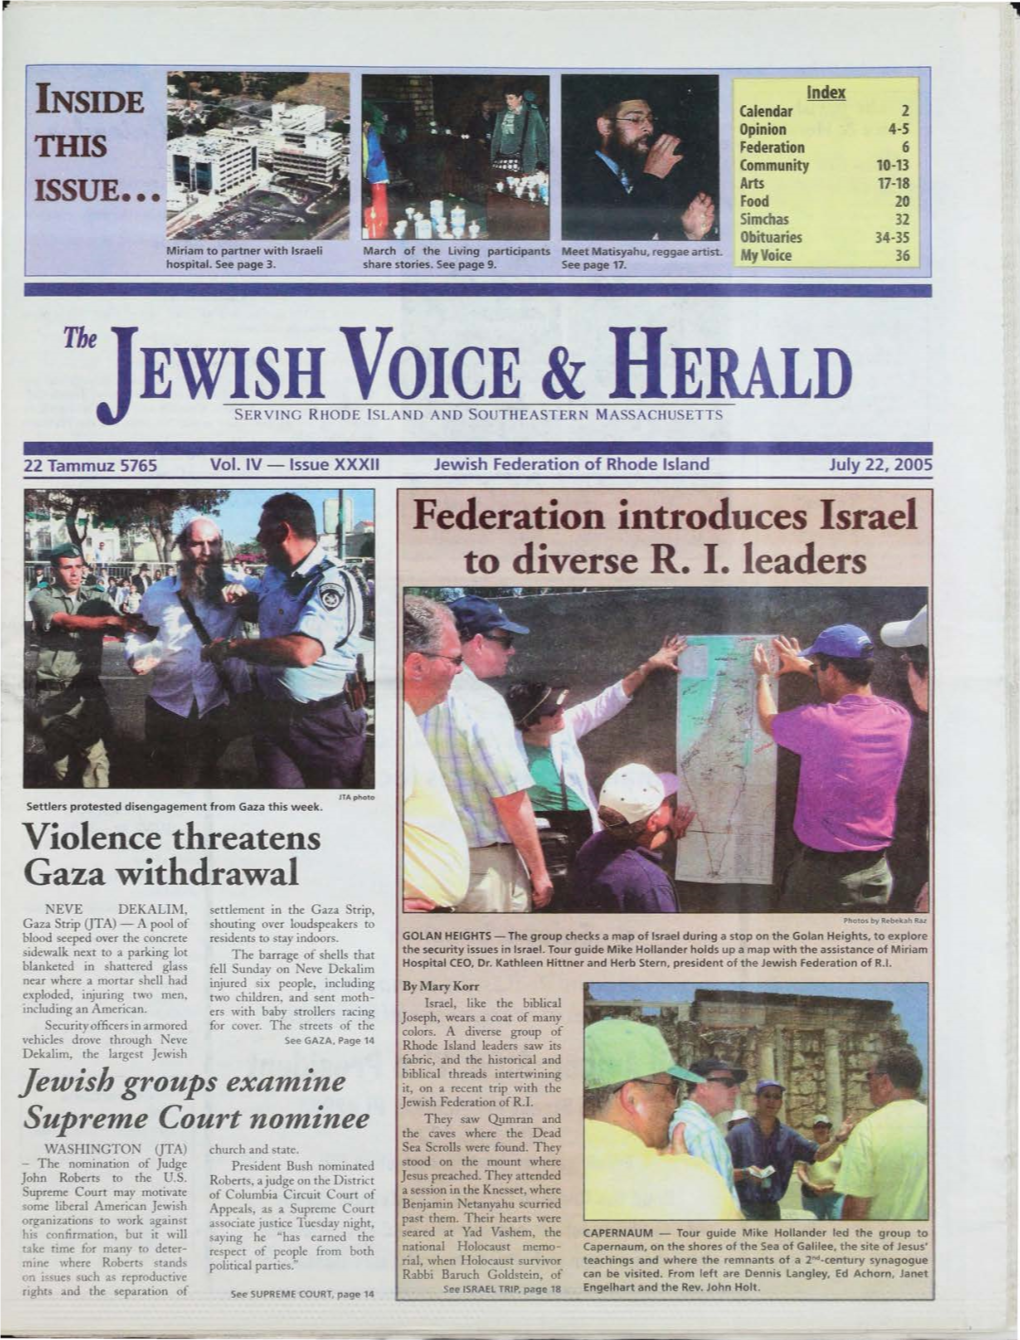 The JEWISH VOICE & HERALD